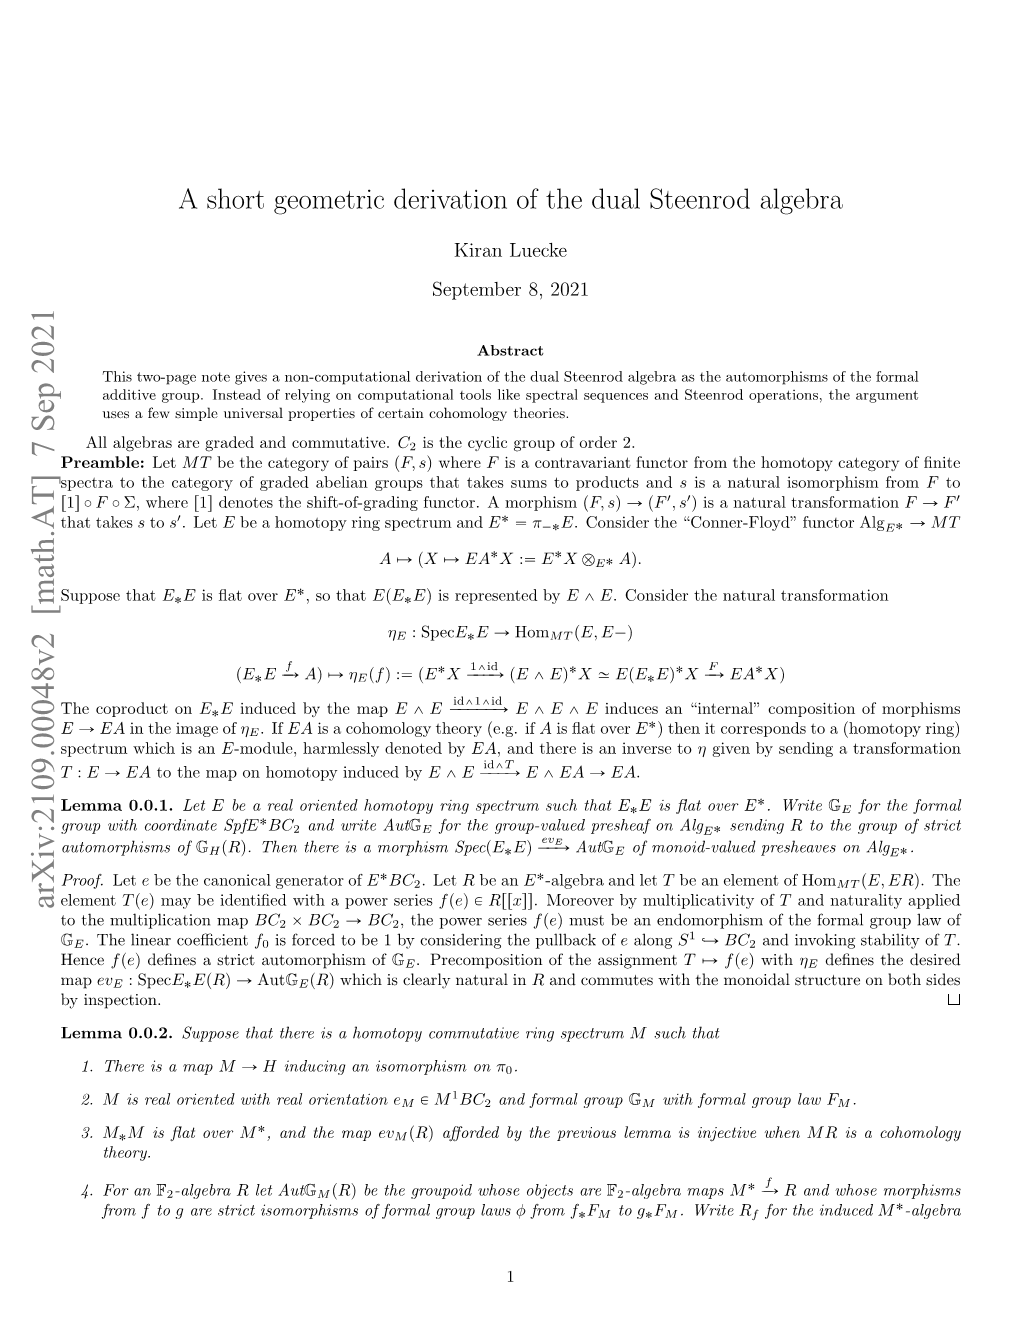 A Short Geometric Derivation of the Dual Steenrod Algebra